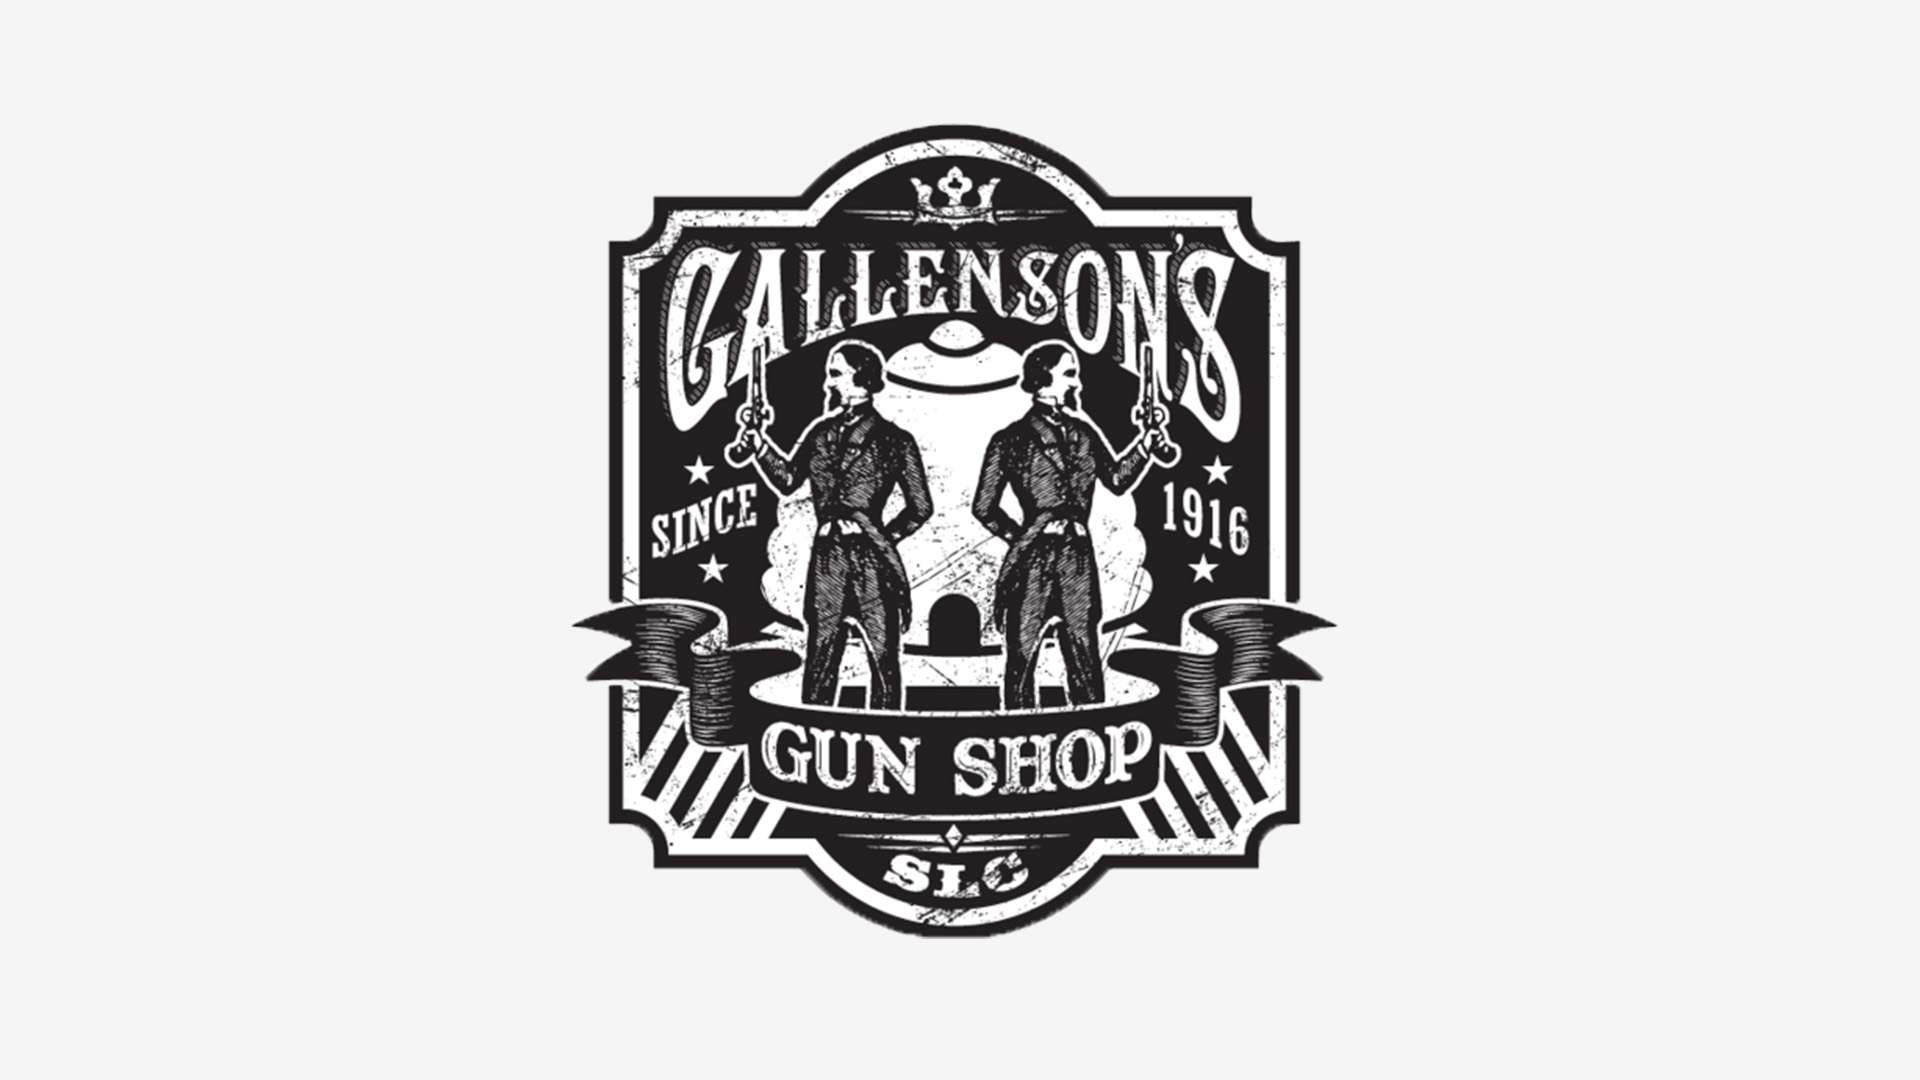 Gallenson's Gun Shop - Gallensons Guns